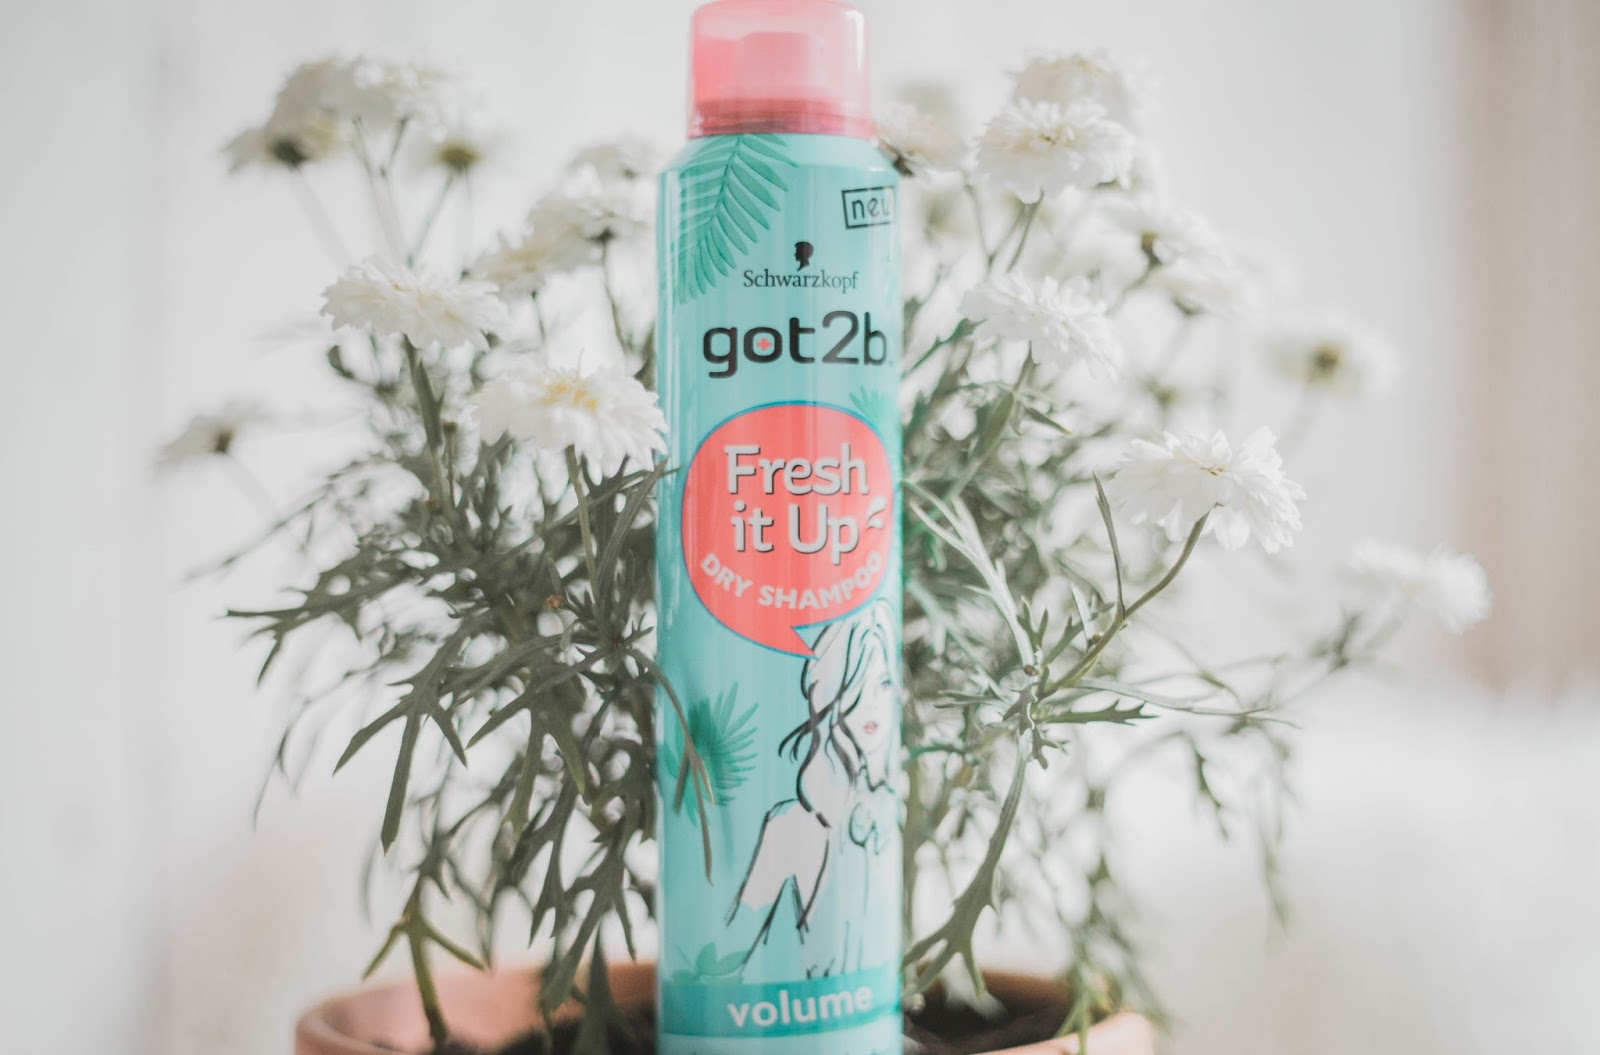 væv ikke indbildskhed Got2b "Fresh it Up" Dry Shampoo Review - stylepeaches